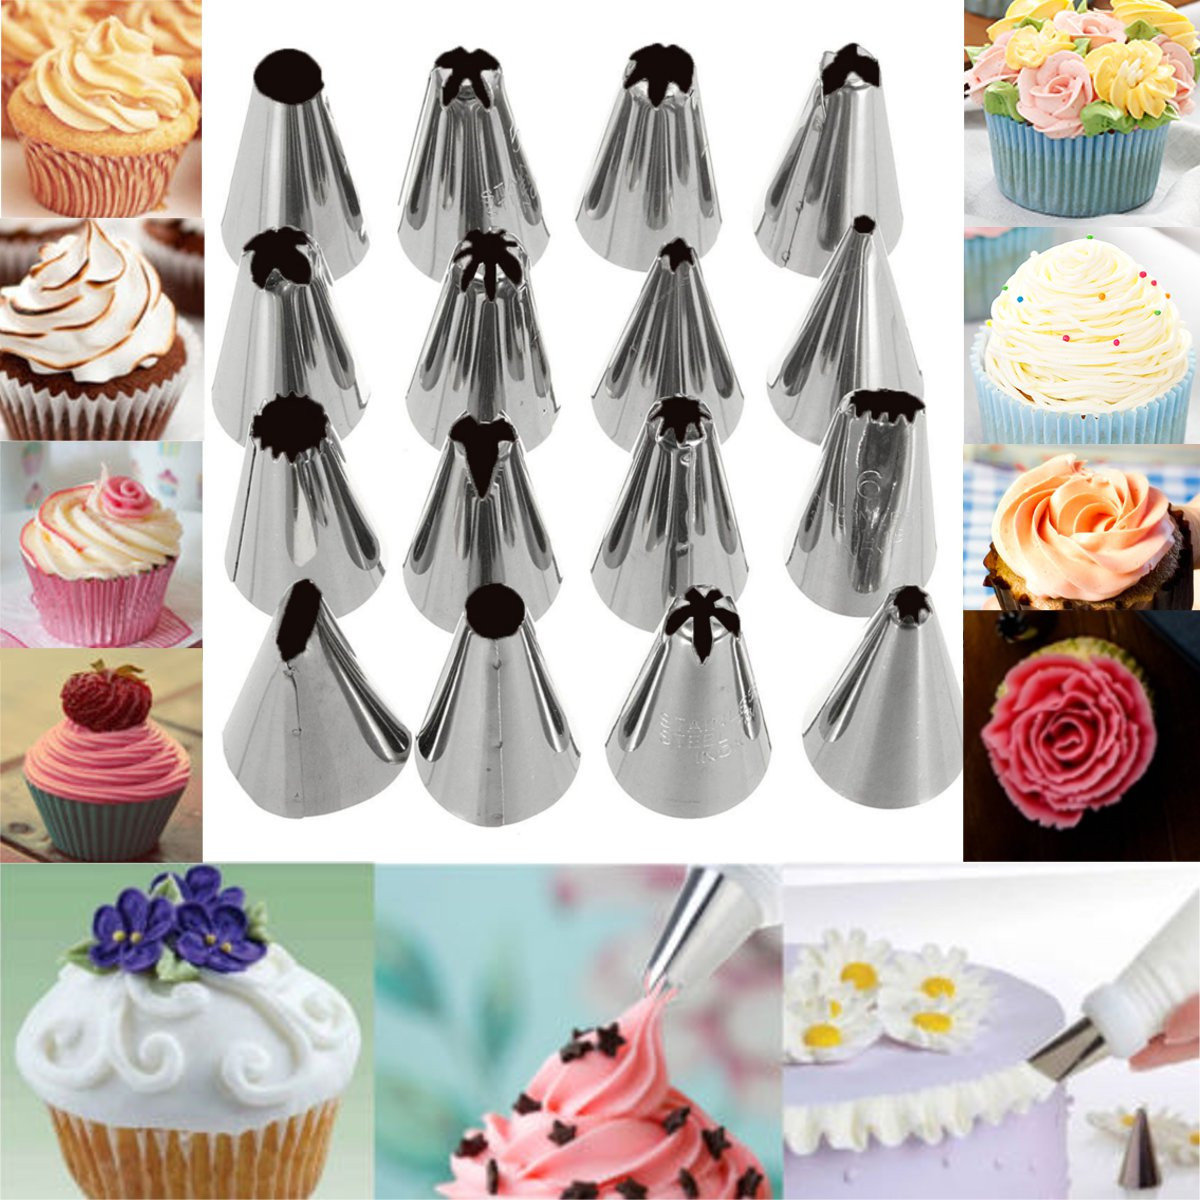 16-delige set Russische piping-tips Multi-shape icing noppen Cake-decoratie Top-bakaccessoires